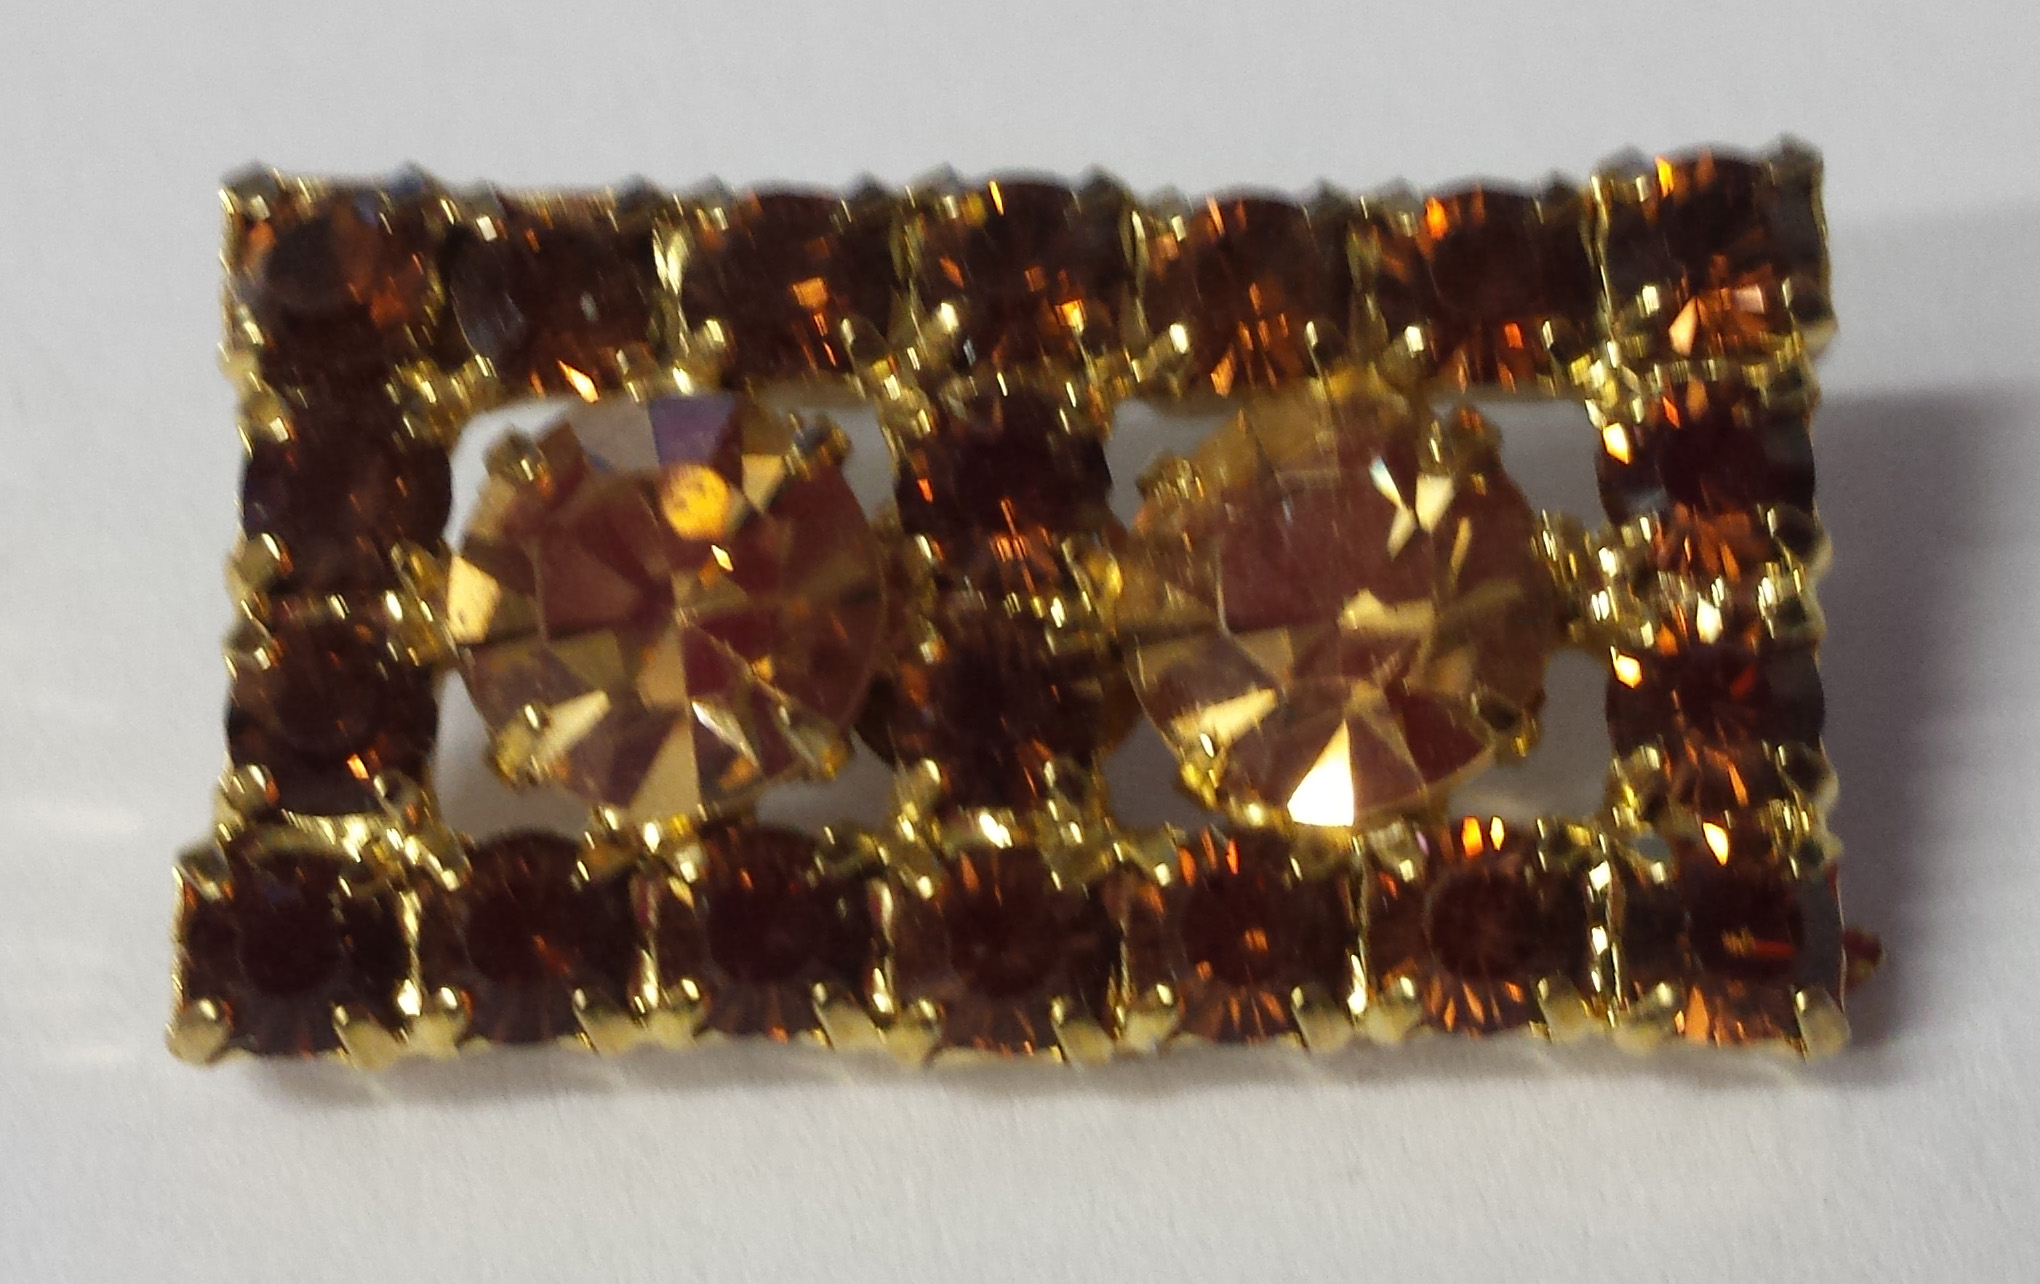 Dazzling Rectangular Rhinestone Button Amber with Gold Backs - 1 inch by 1/2 inch #Daz0019